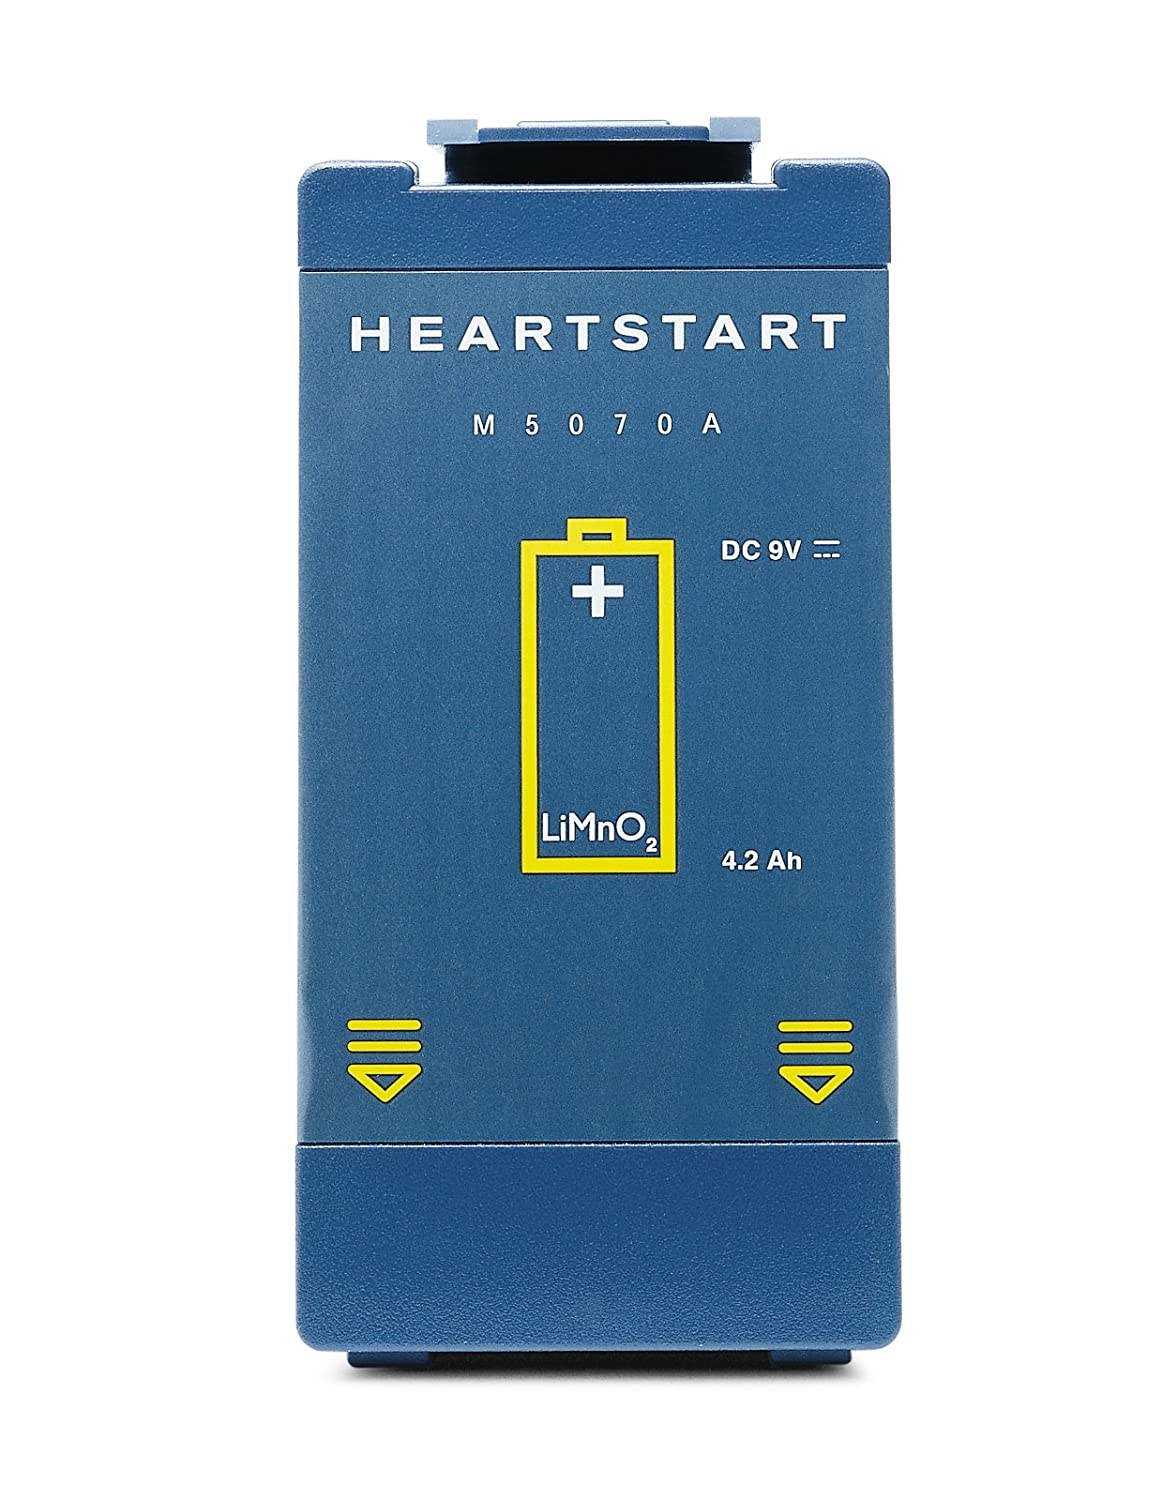 Philips-HeartStart-OnSite-Replacement-Battery.jpg